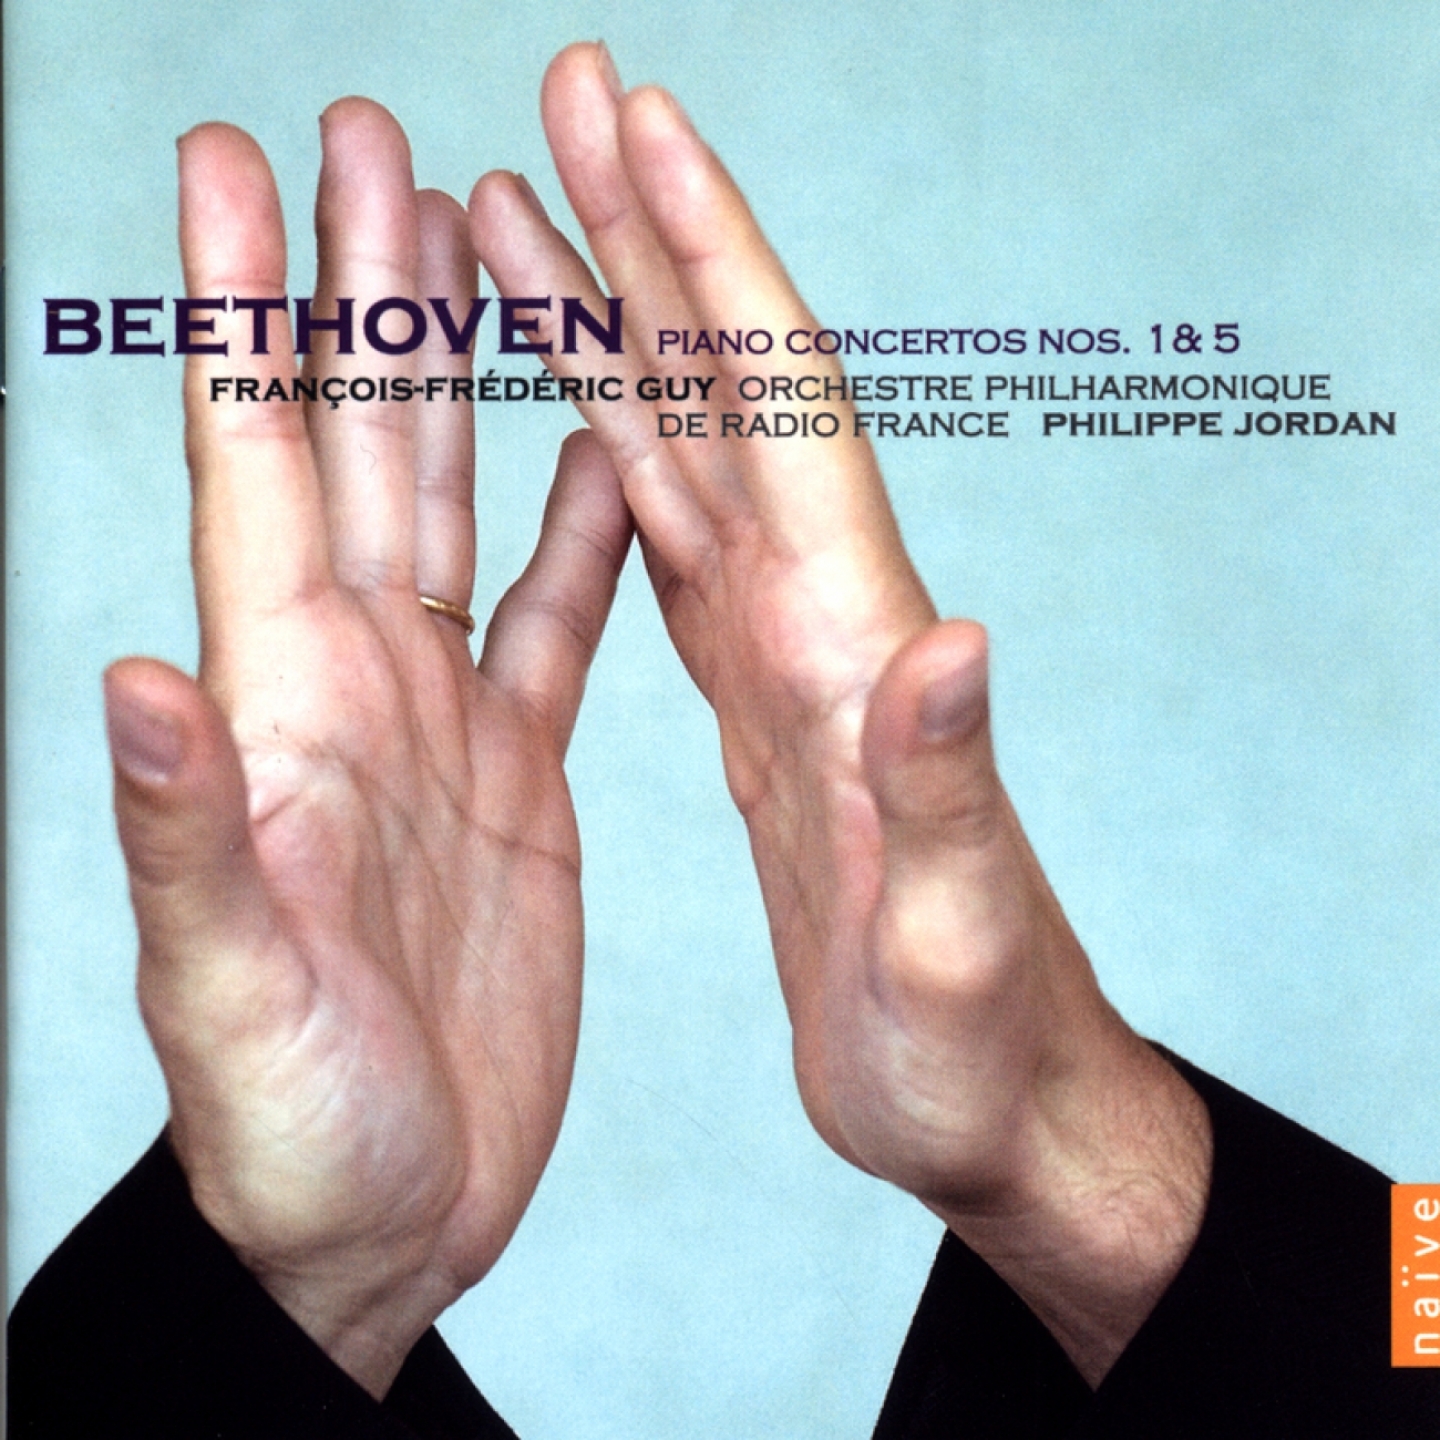 Concerto for Piano and Orchestra No. 5 in E-Flat Major, Op. 73, "Emperor": I. Allegro